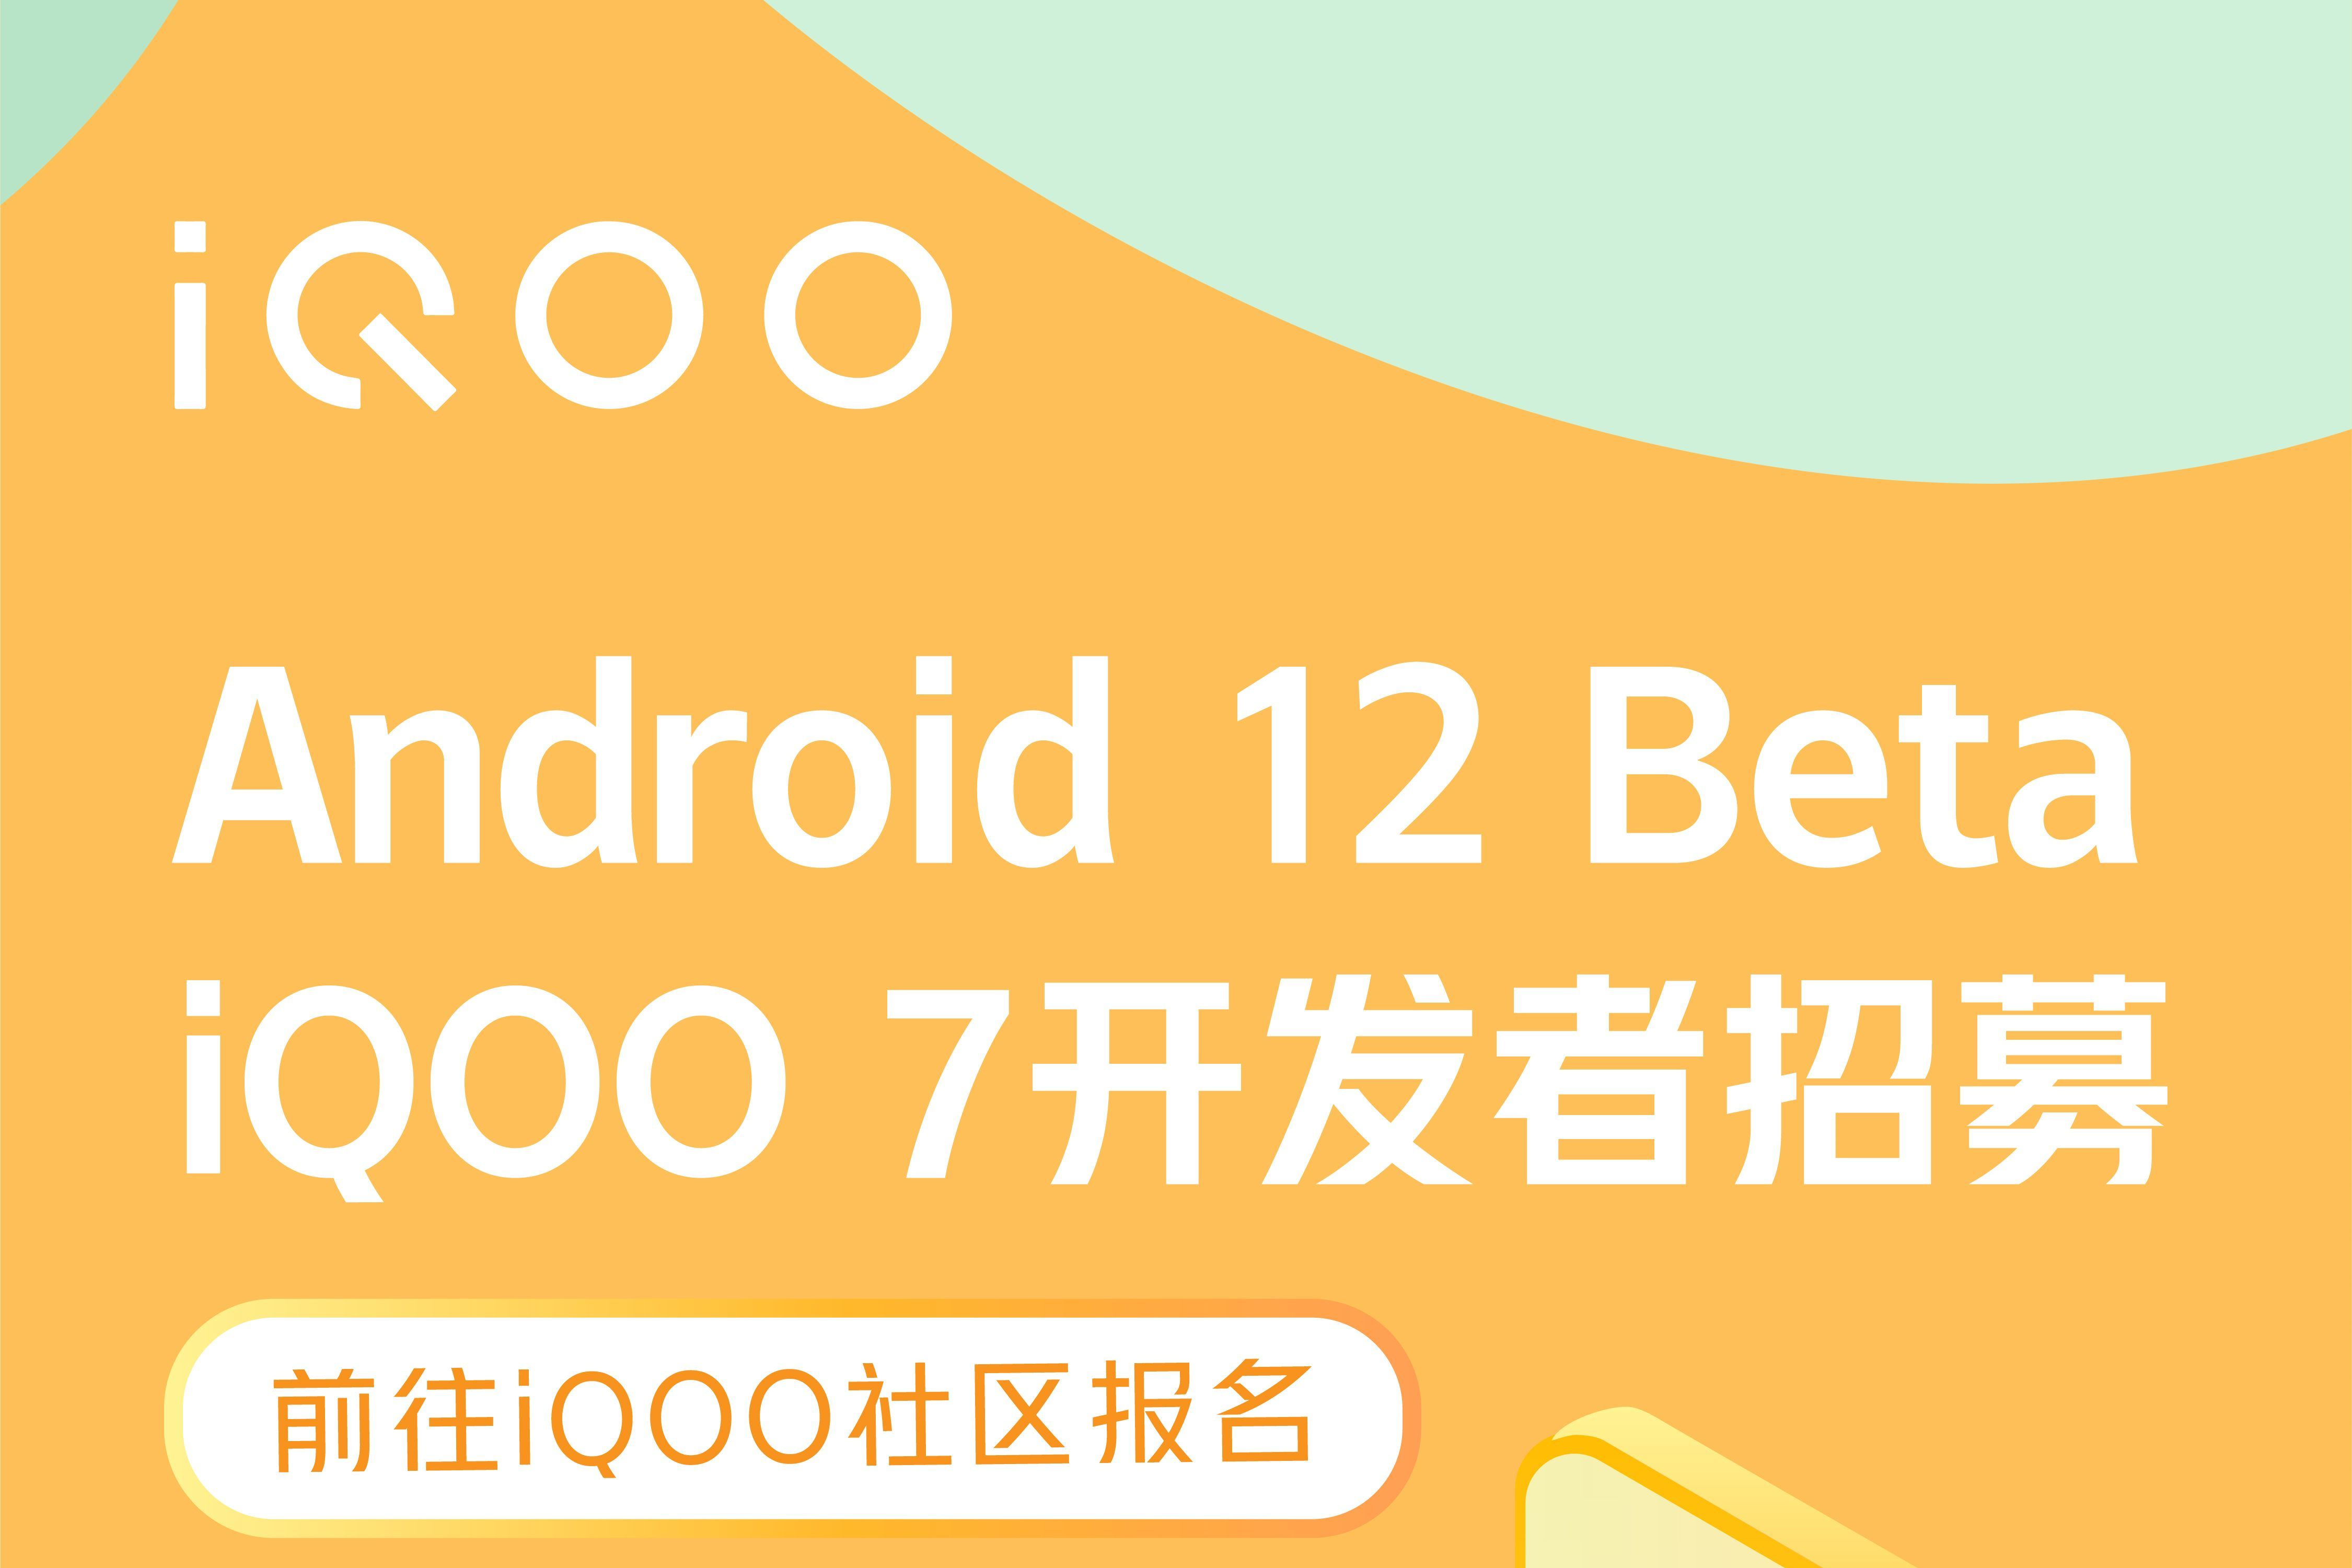 iQOO 7 Android 12 Beta China